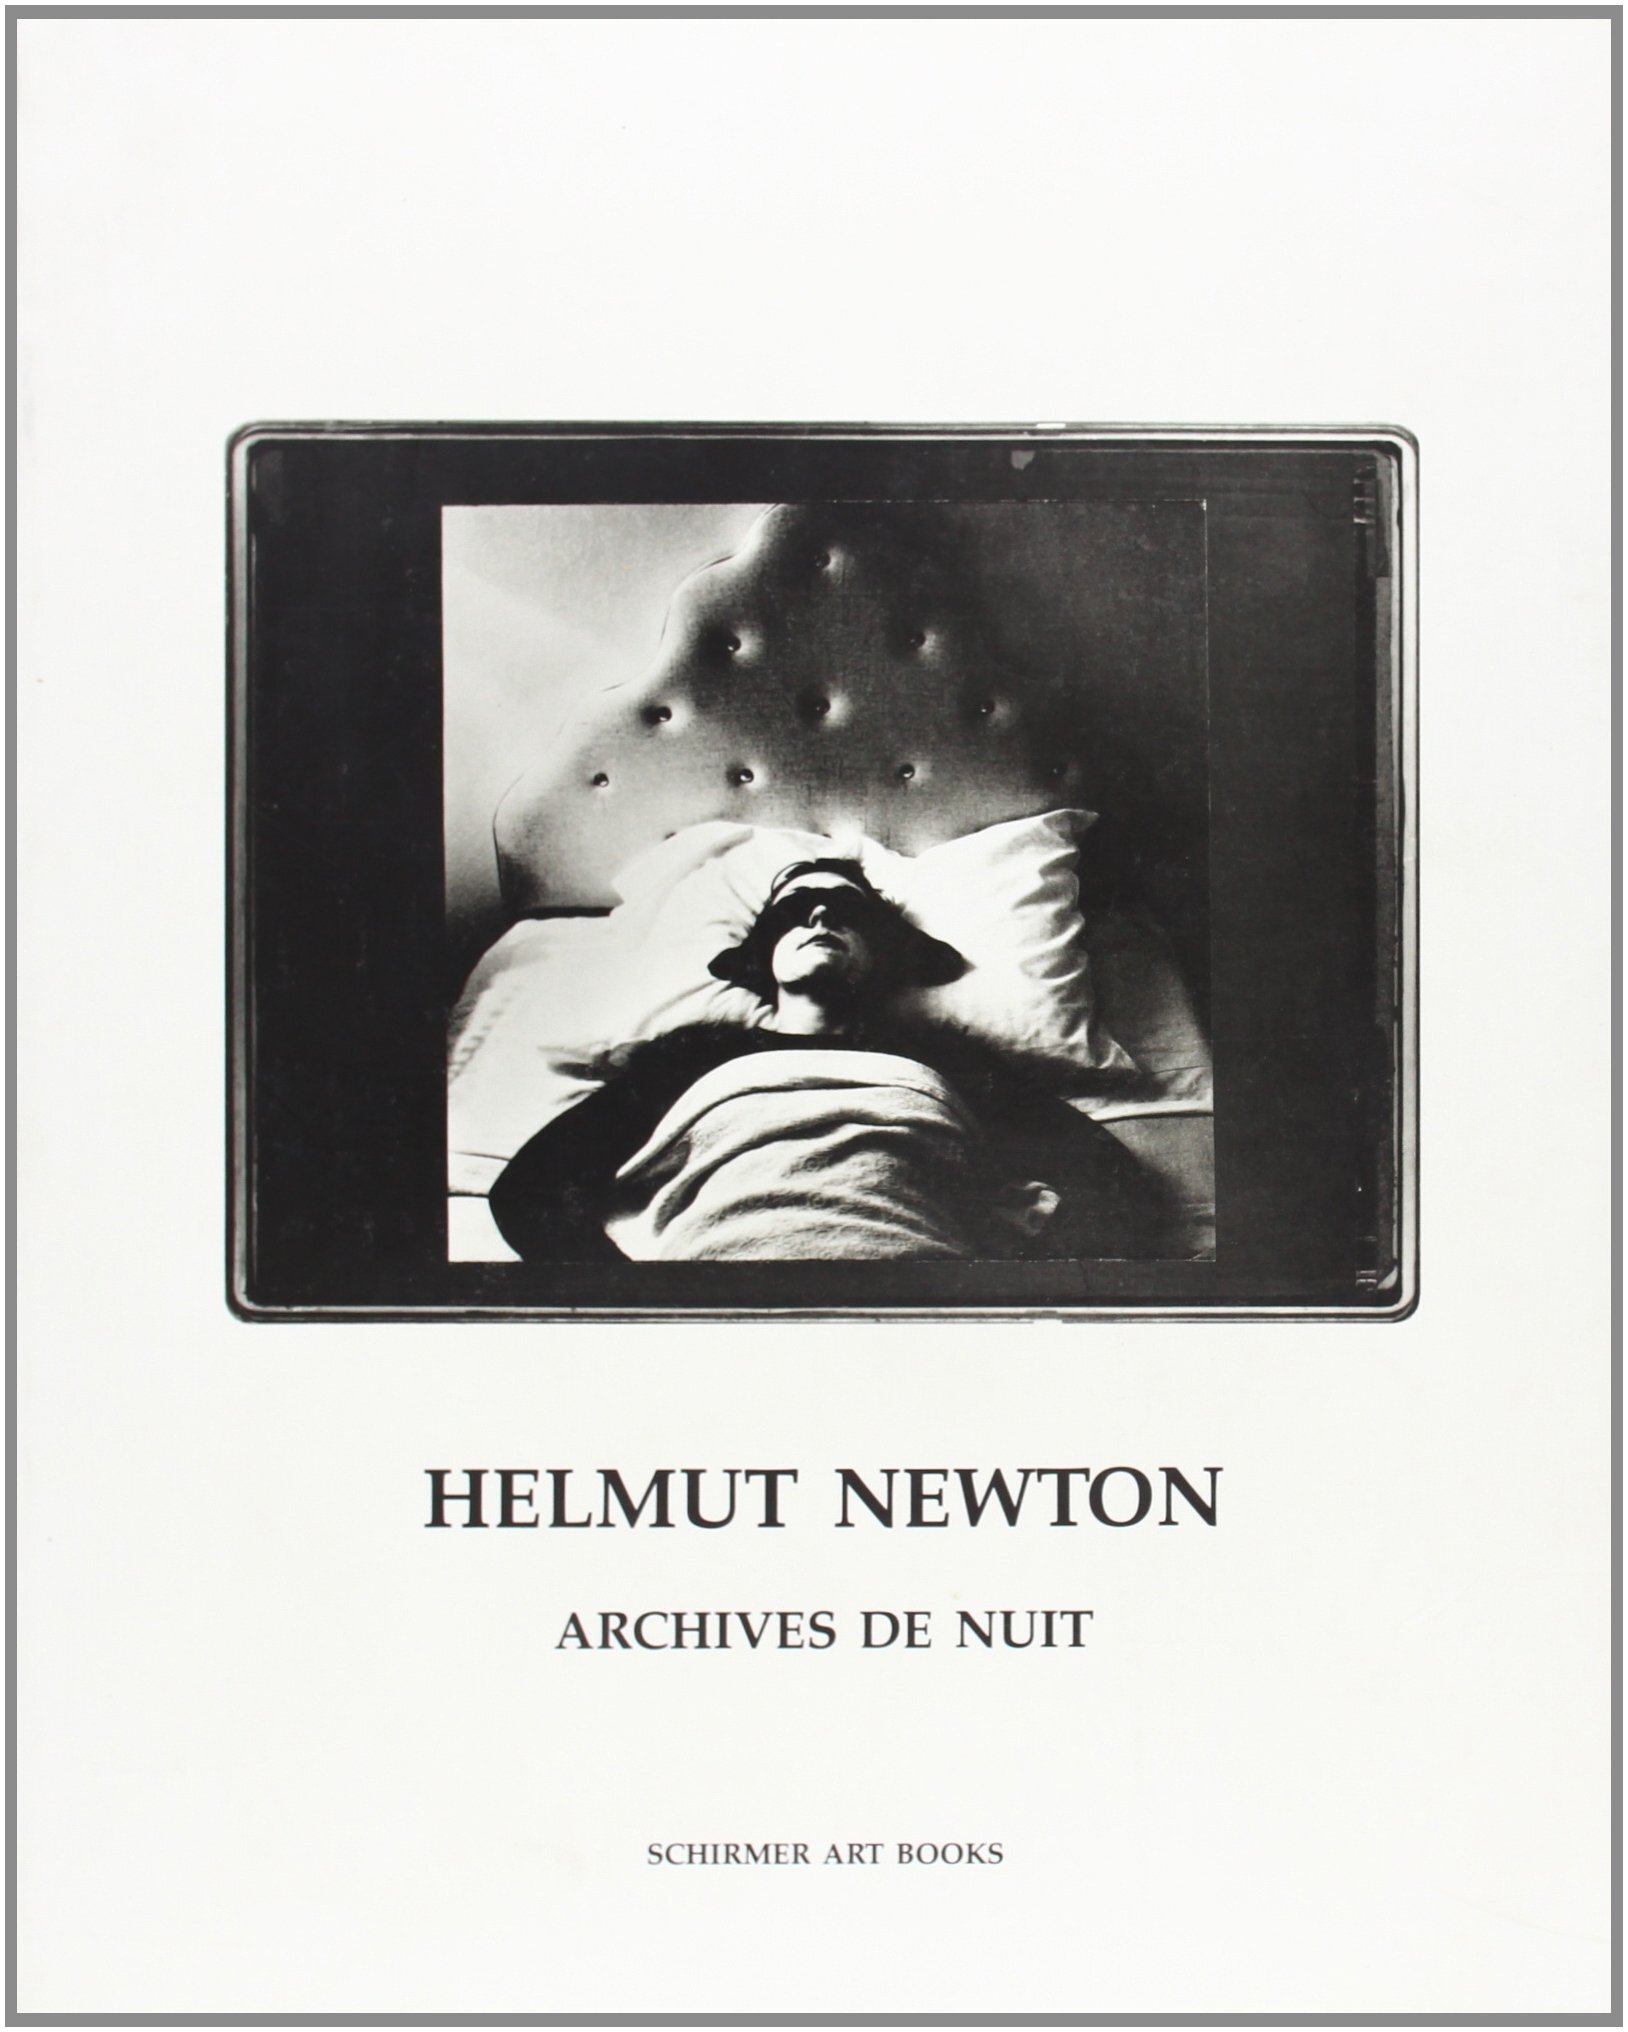 Helmut Newton — worldwide representation — Maconochie Photography